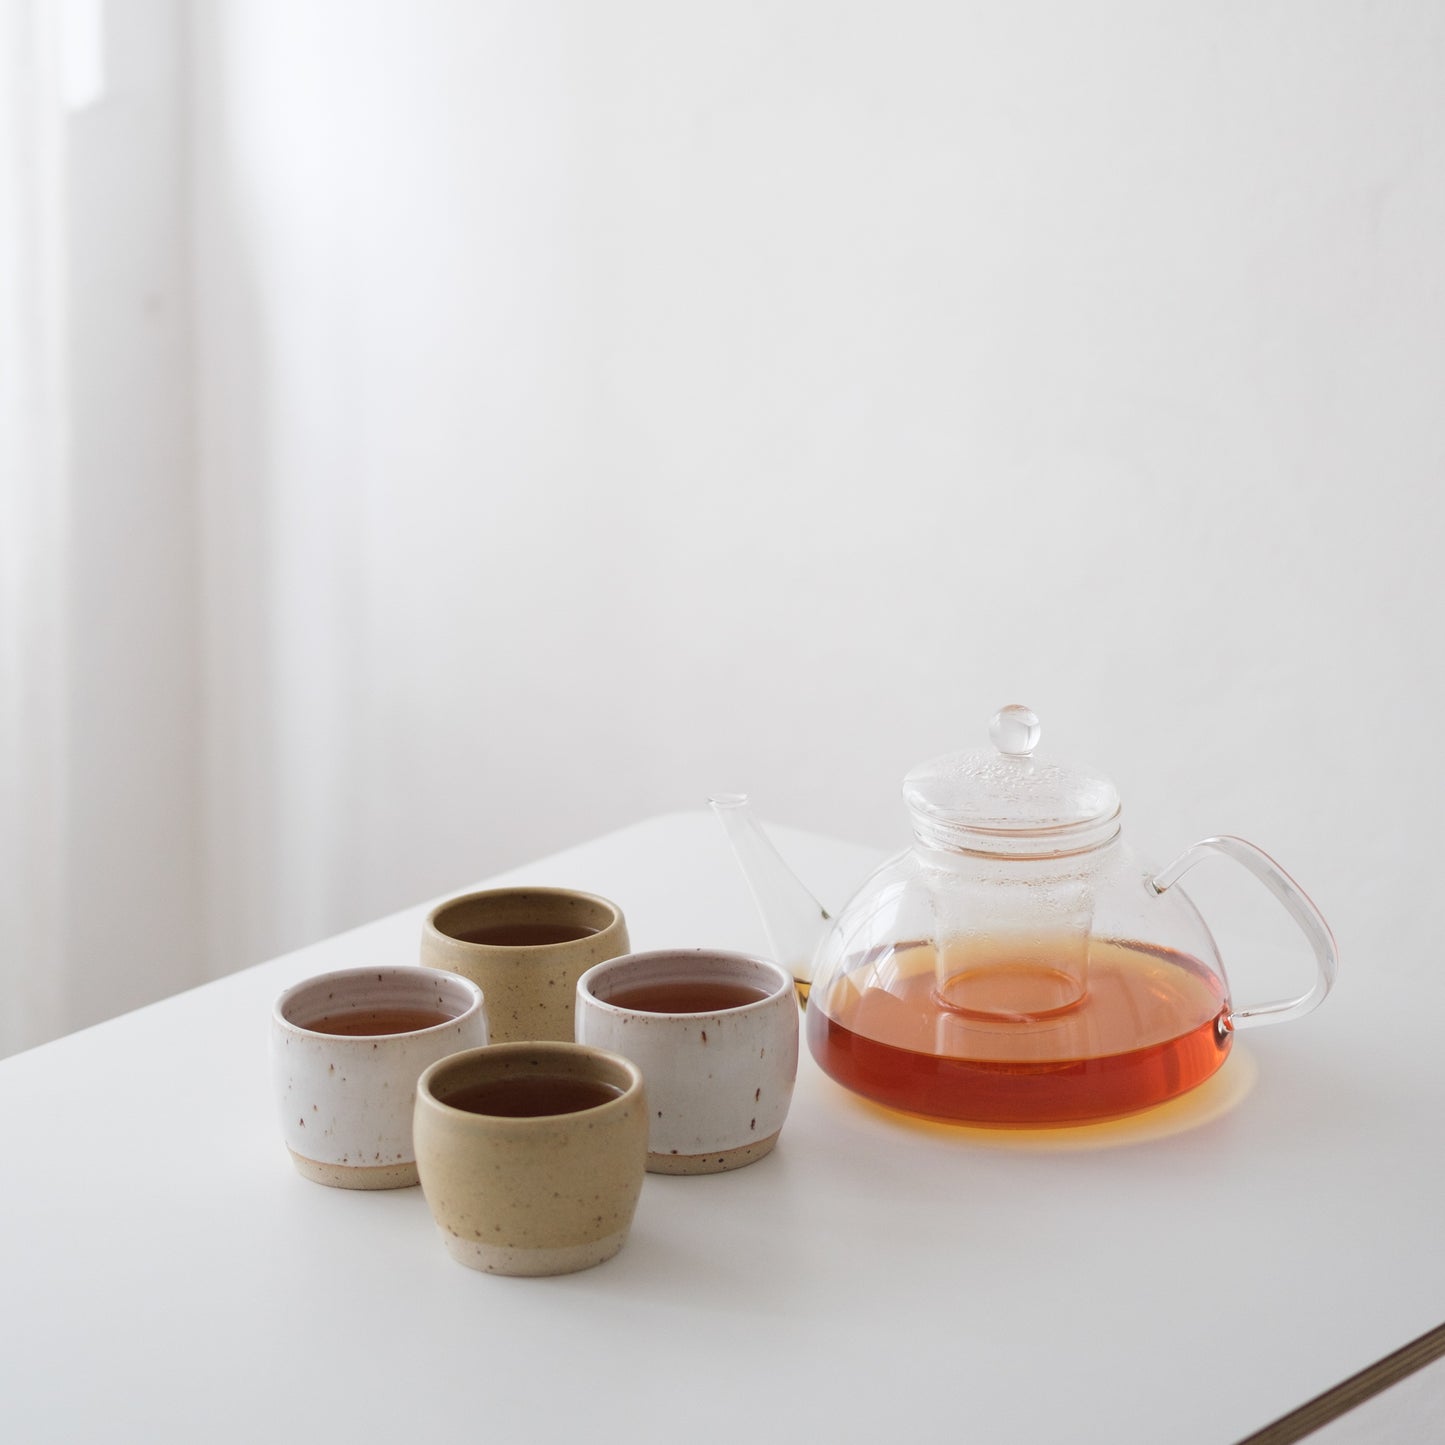 Four Person Teapot - Glass